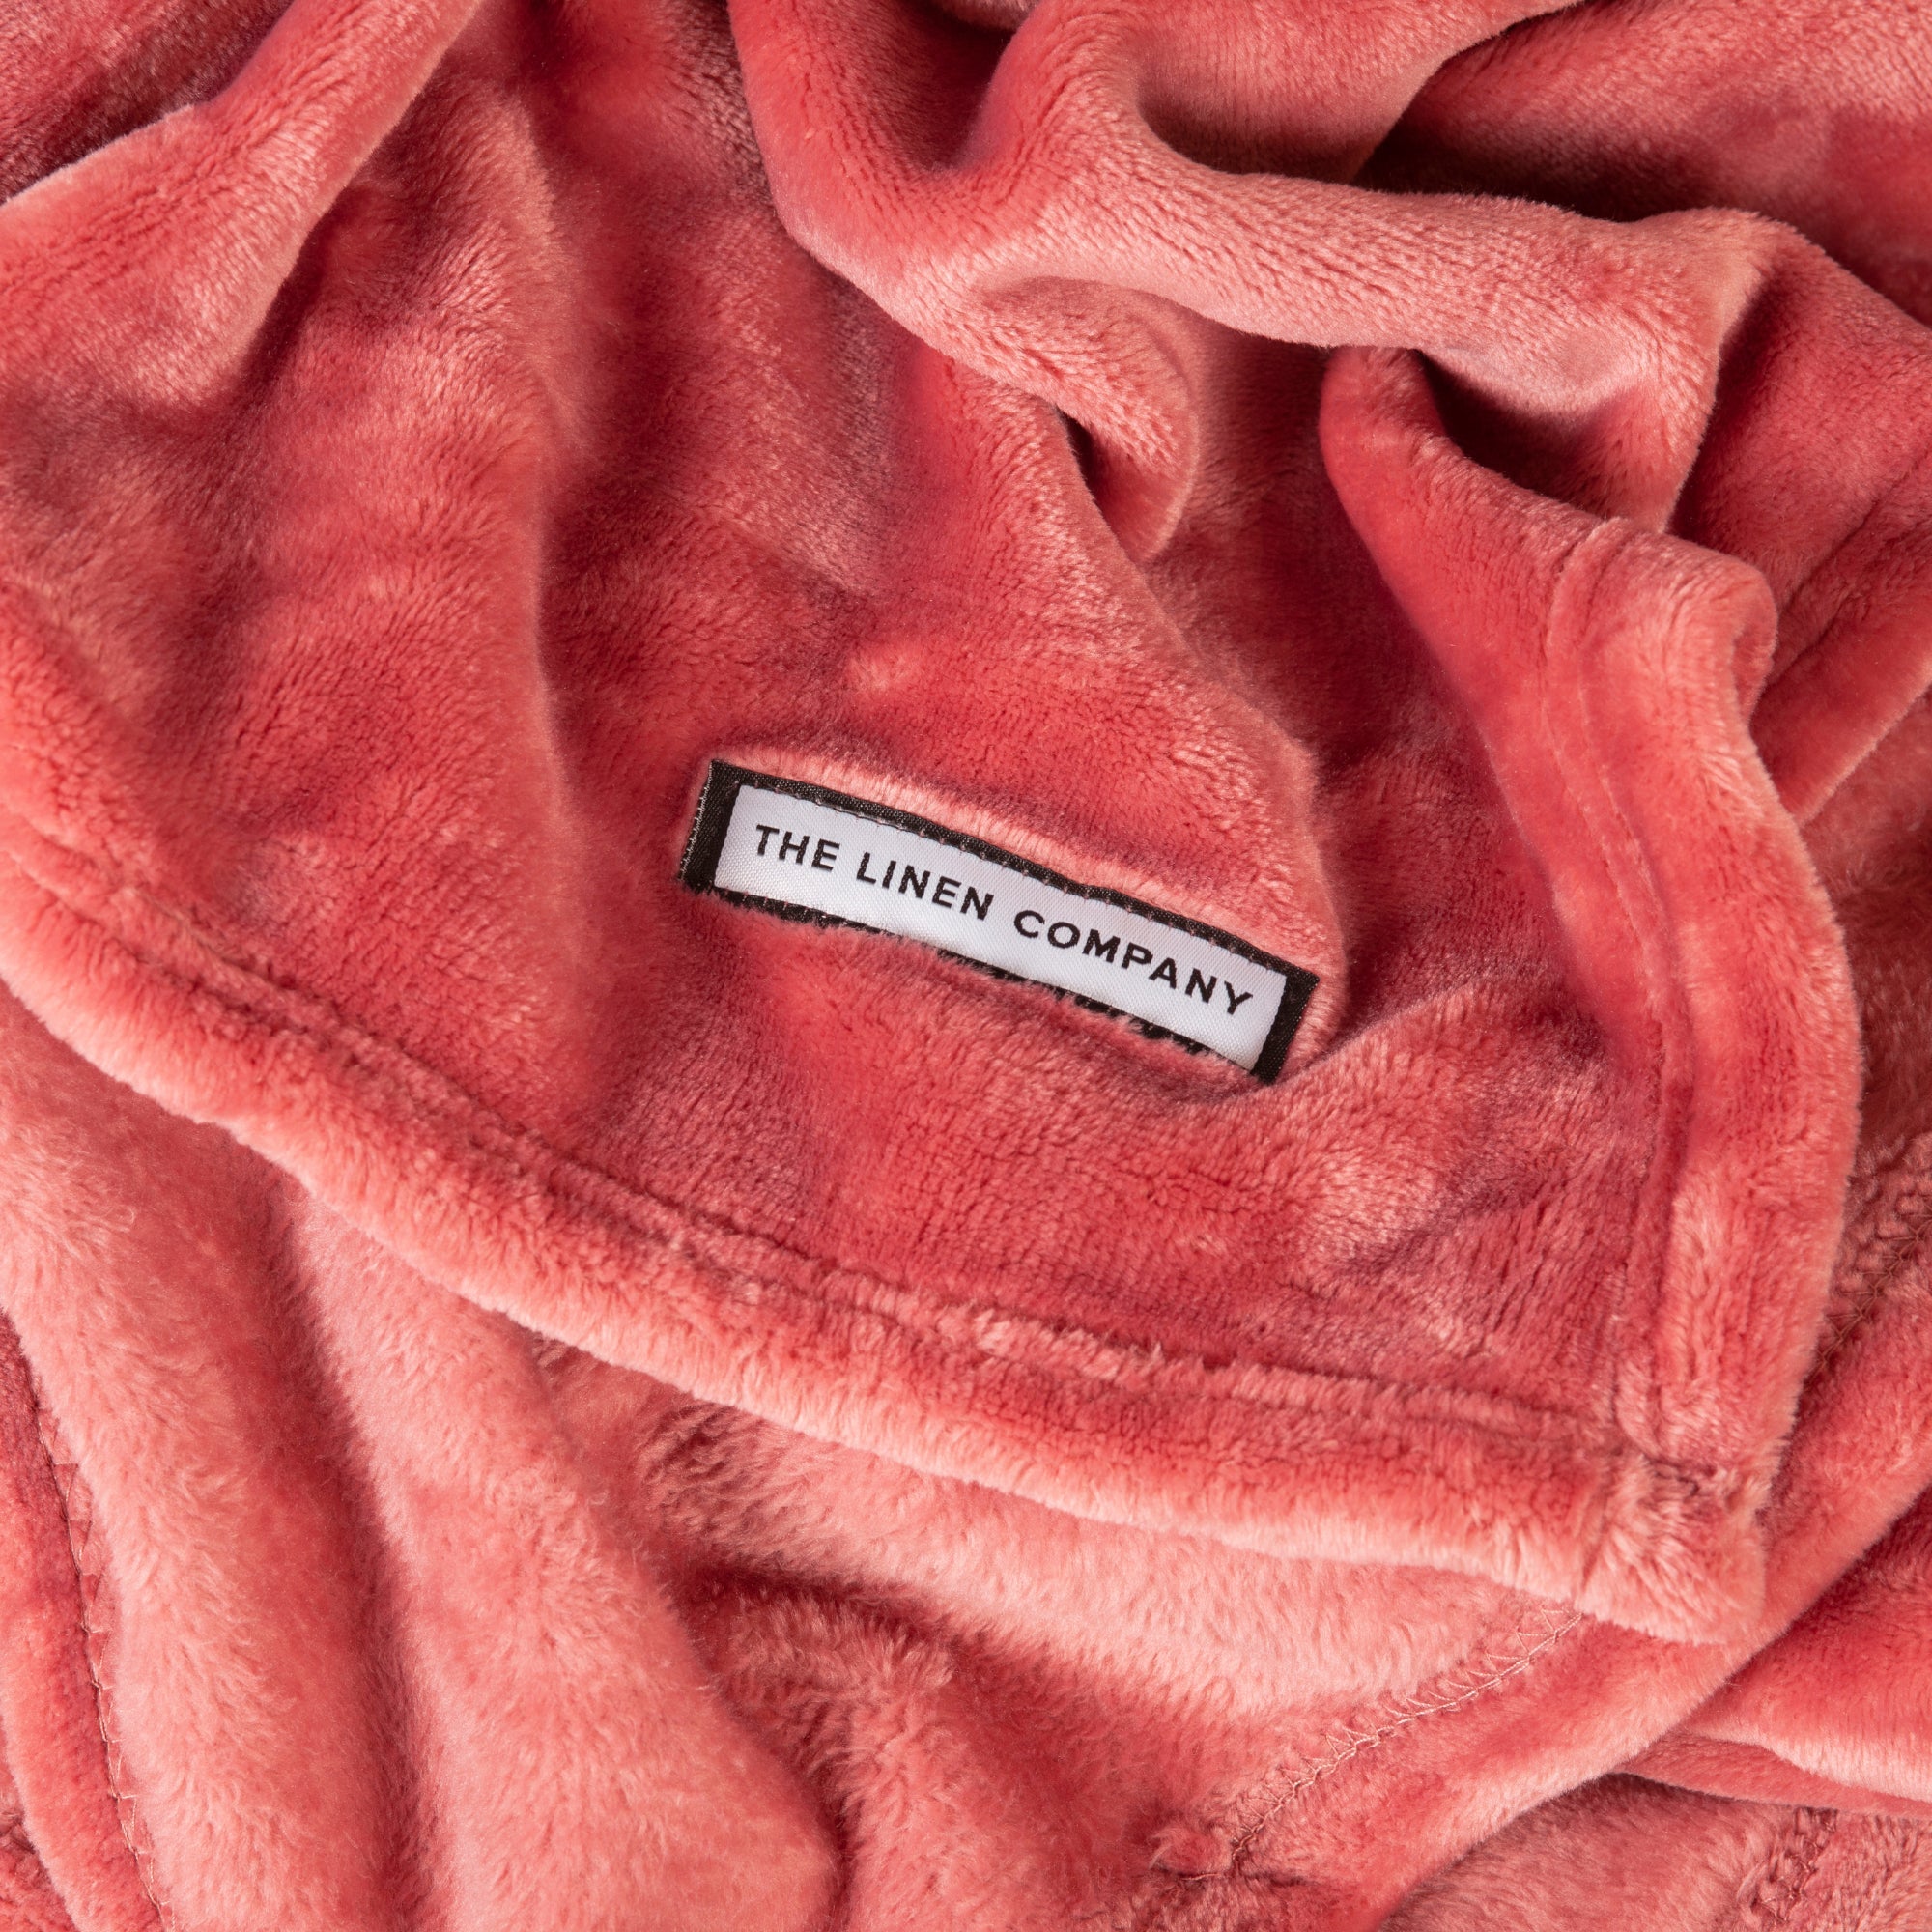 The Linen Company Bedding Dusty Rose Microfiber Plush Blanket